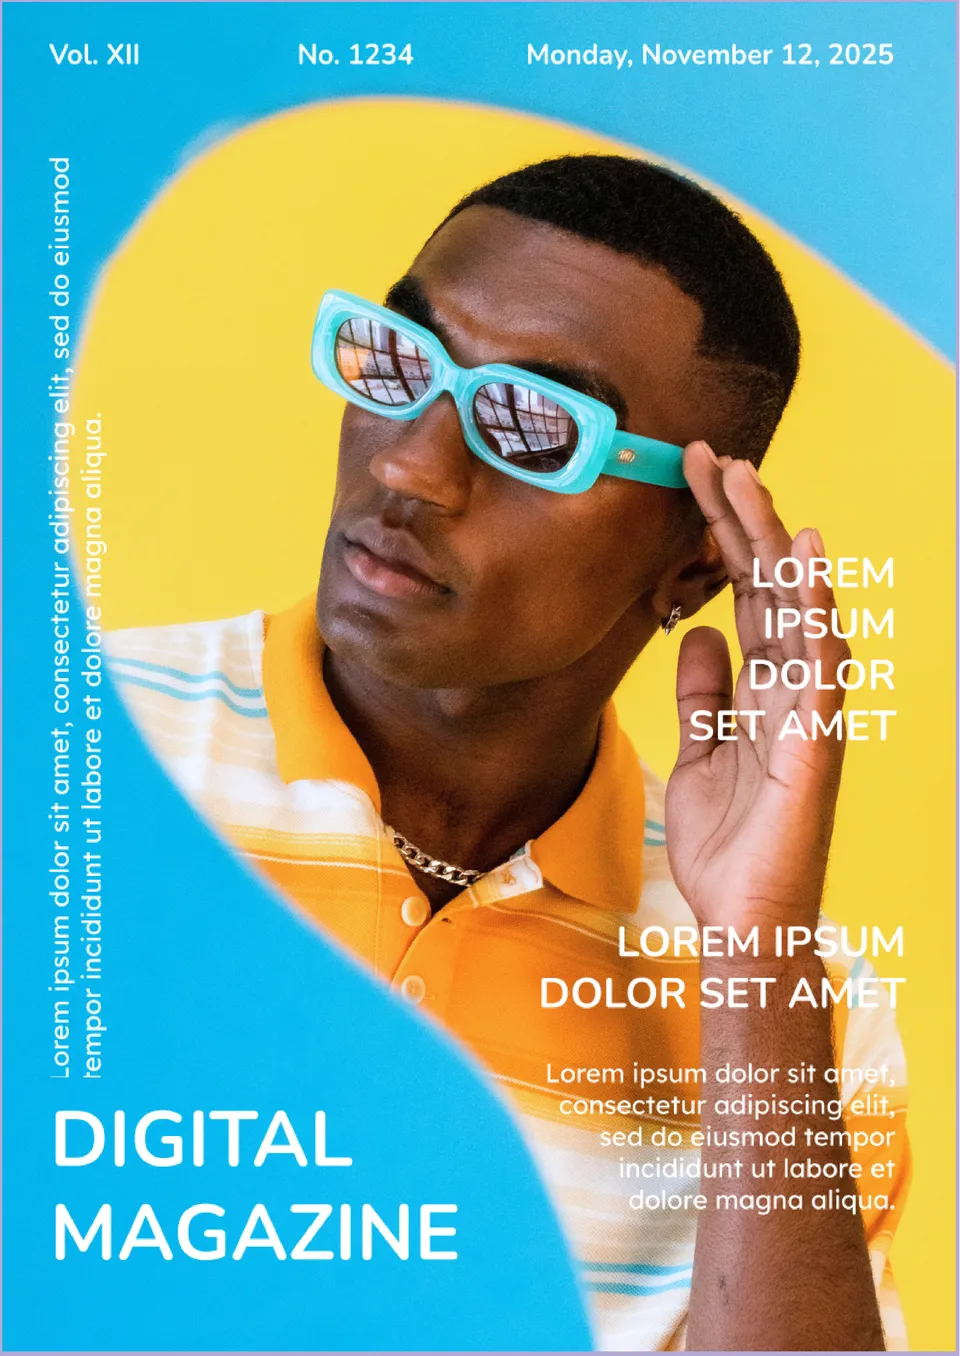 Digital Magazine Template